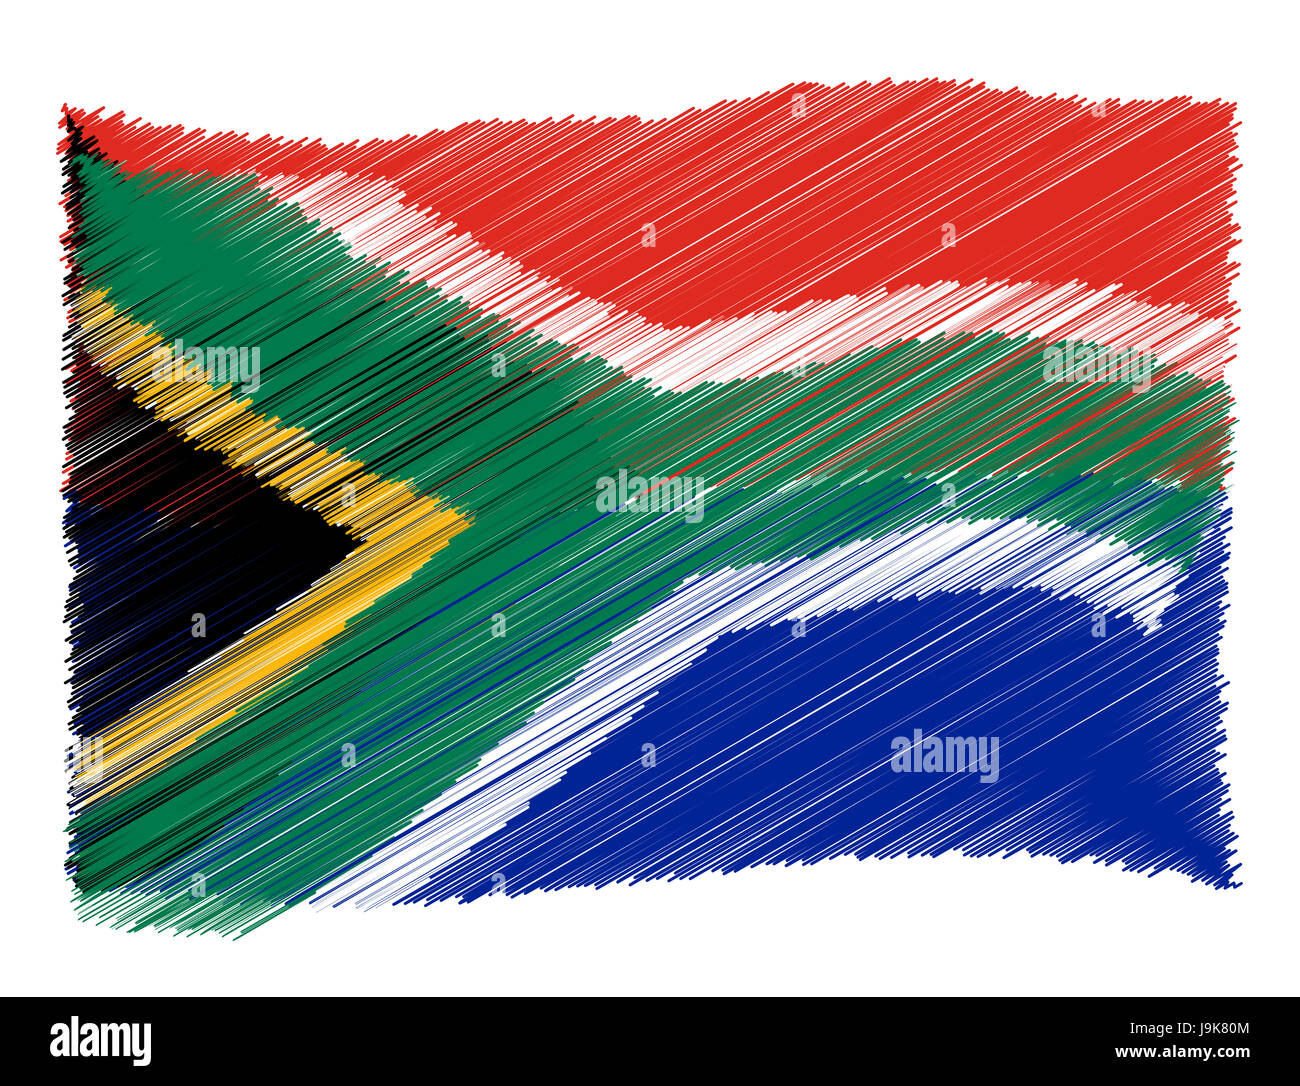 Südafrika, Kapstadt, Reisen, Urlaub, Urlaub, Ferien, Urlaub, Flagge, Stockfoto